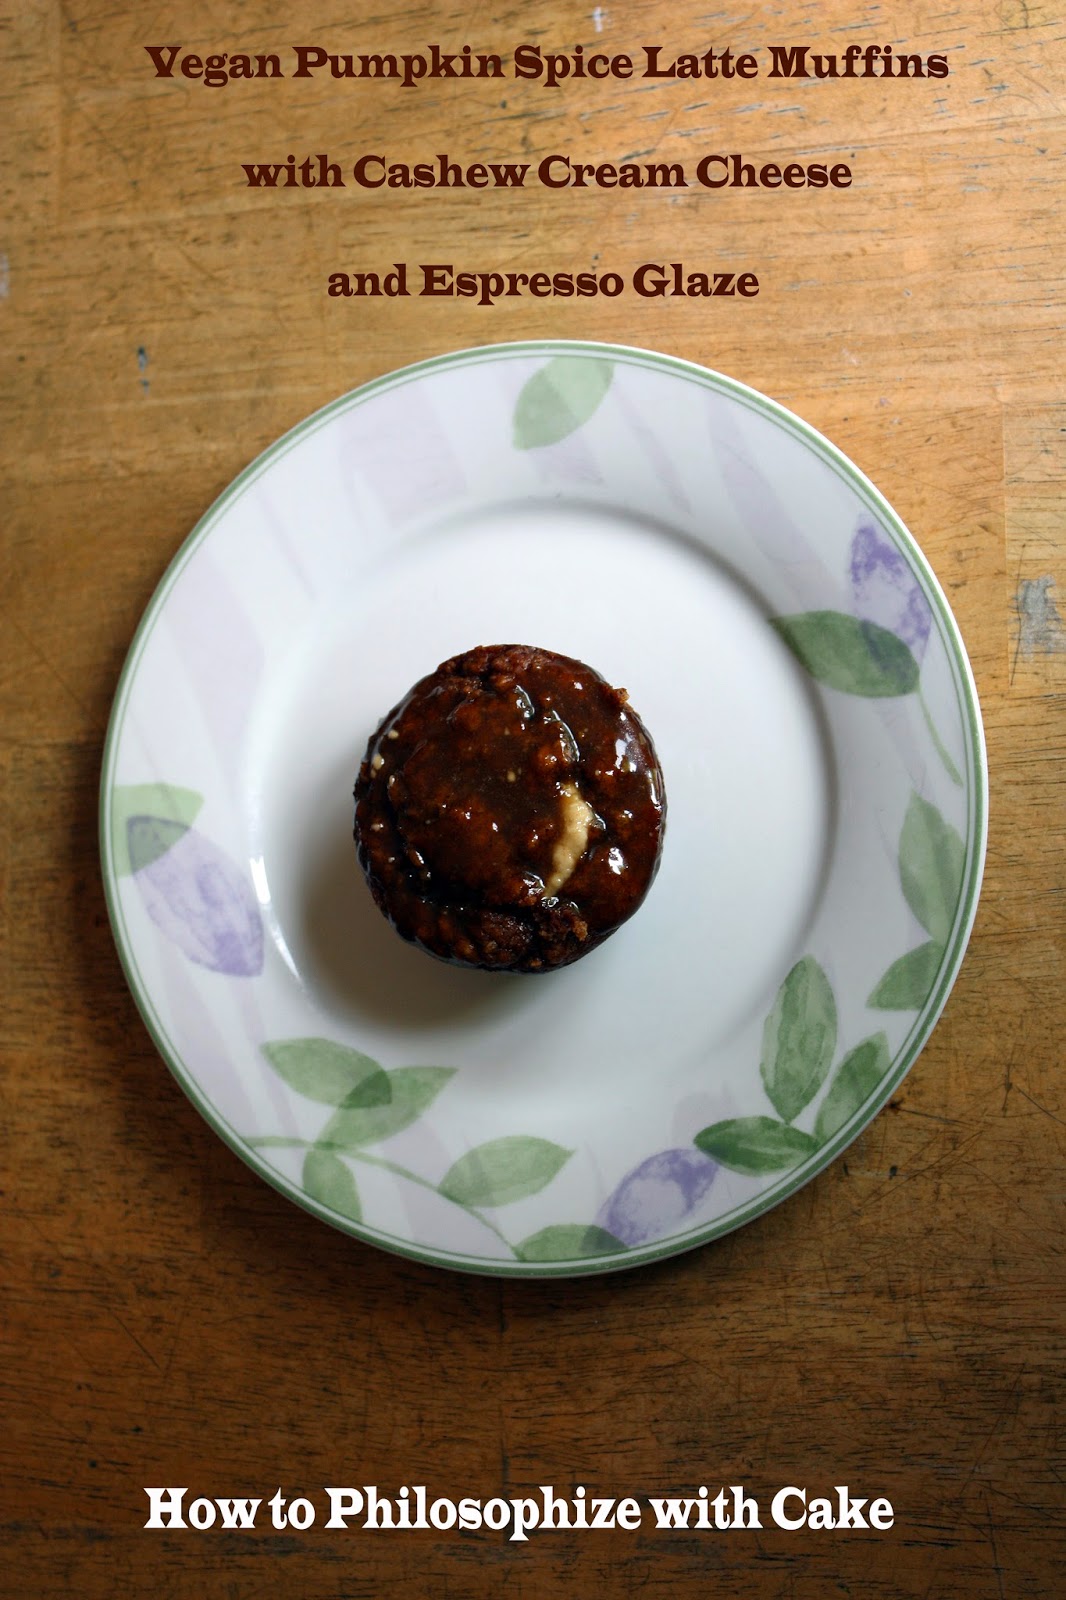 pumpkin spice latte muffins with espresso glaze